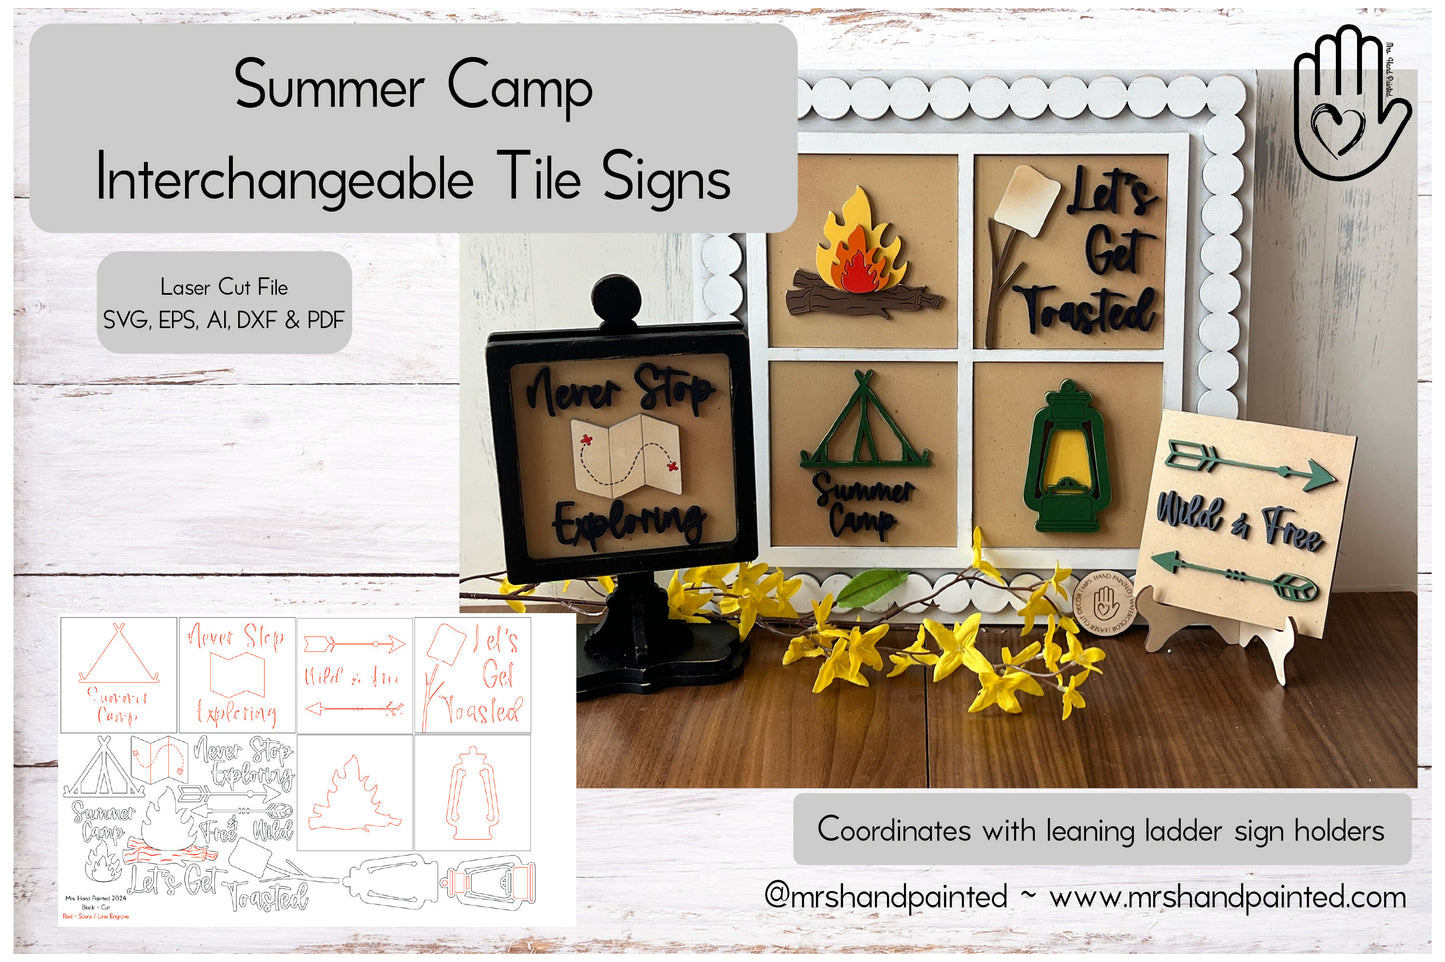 Digital Laser Cut File - Summer Camp Interchangeable Sign Tiles